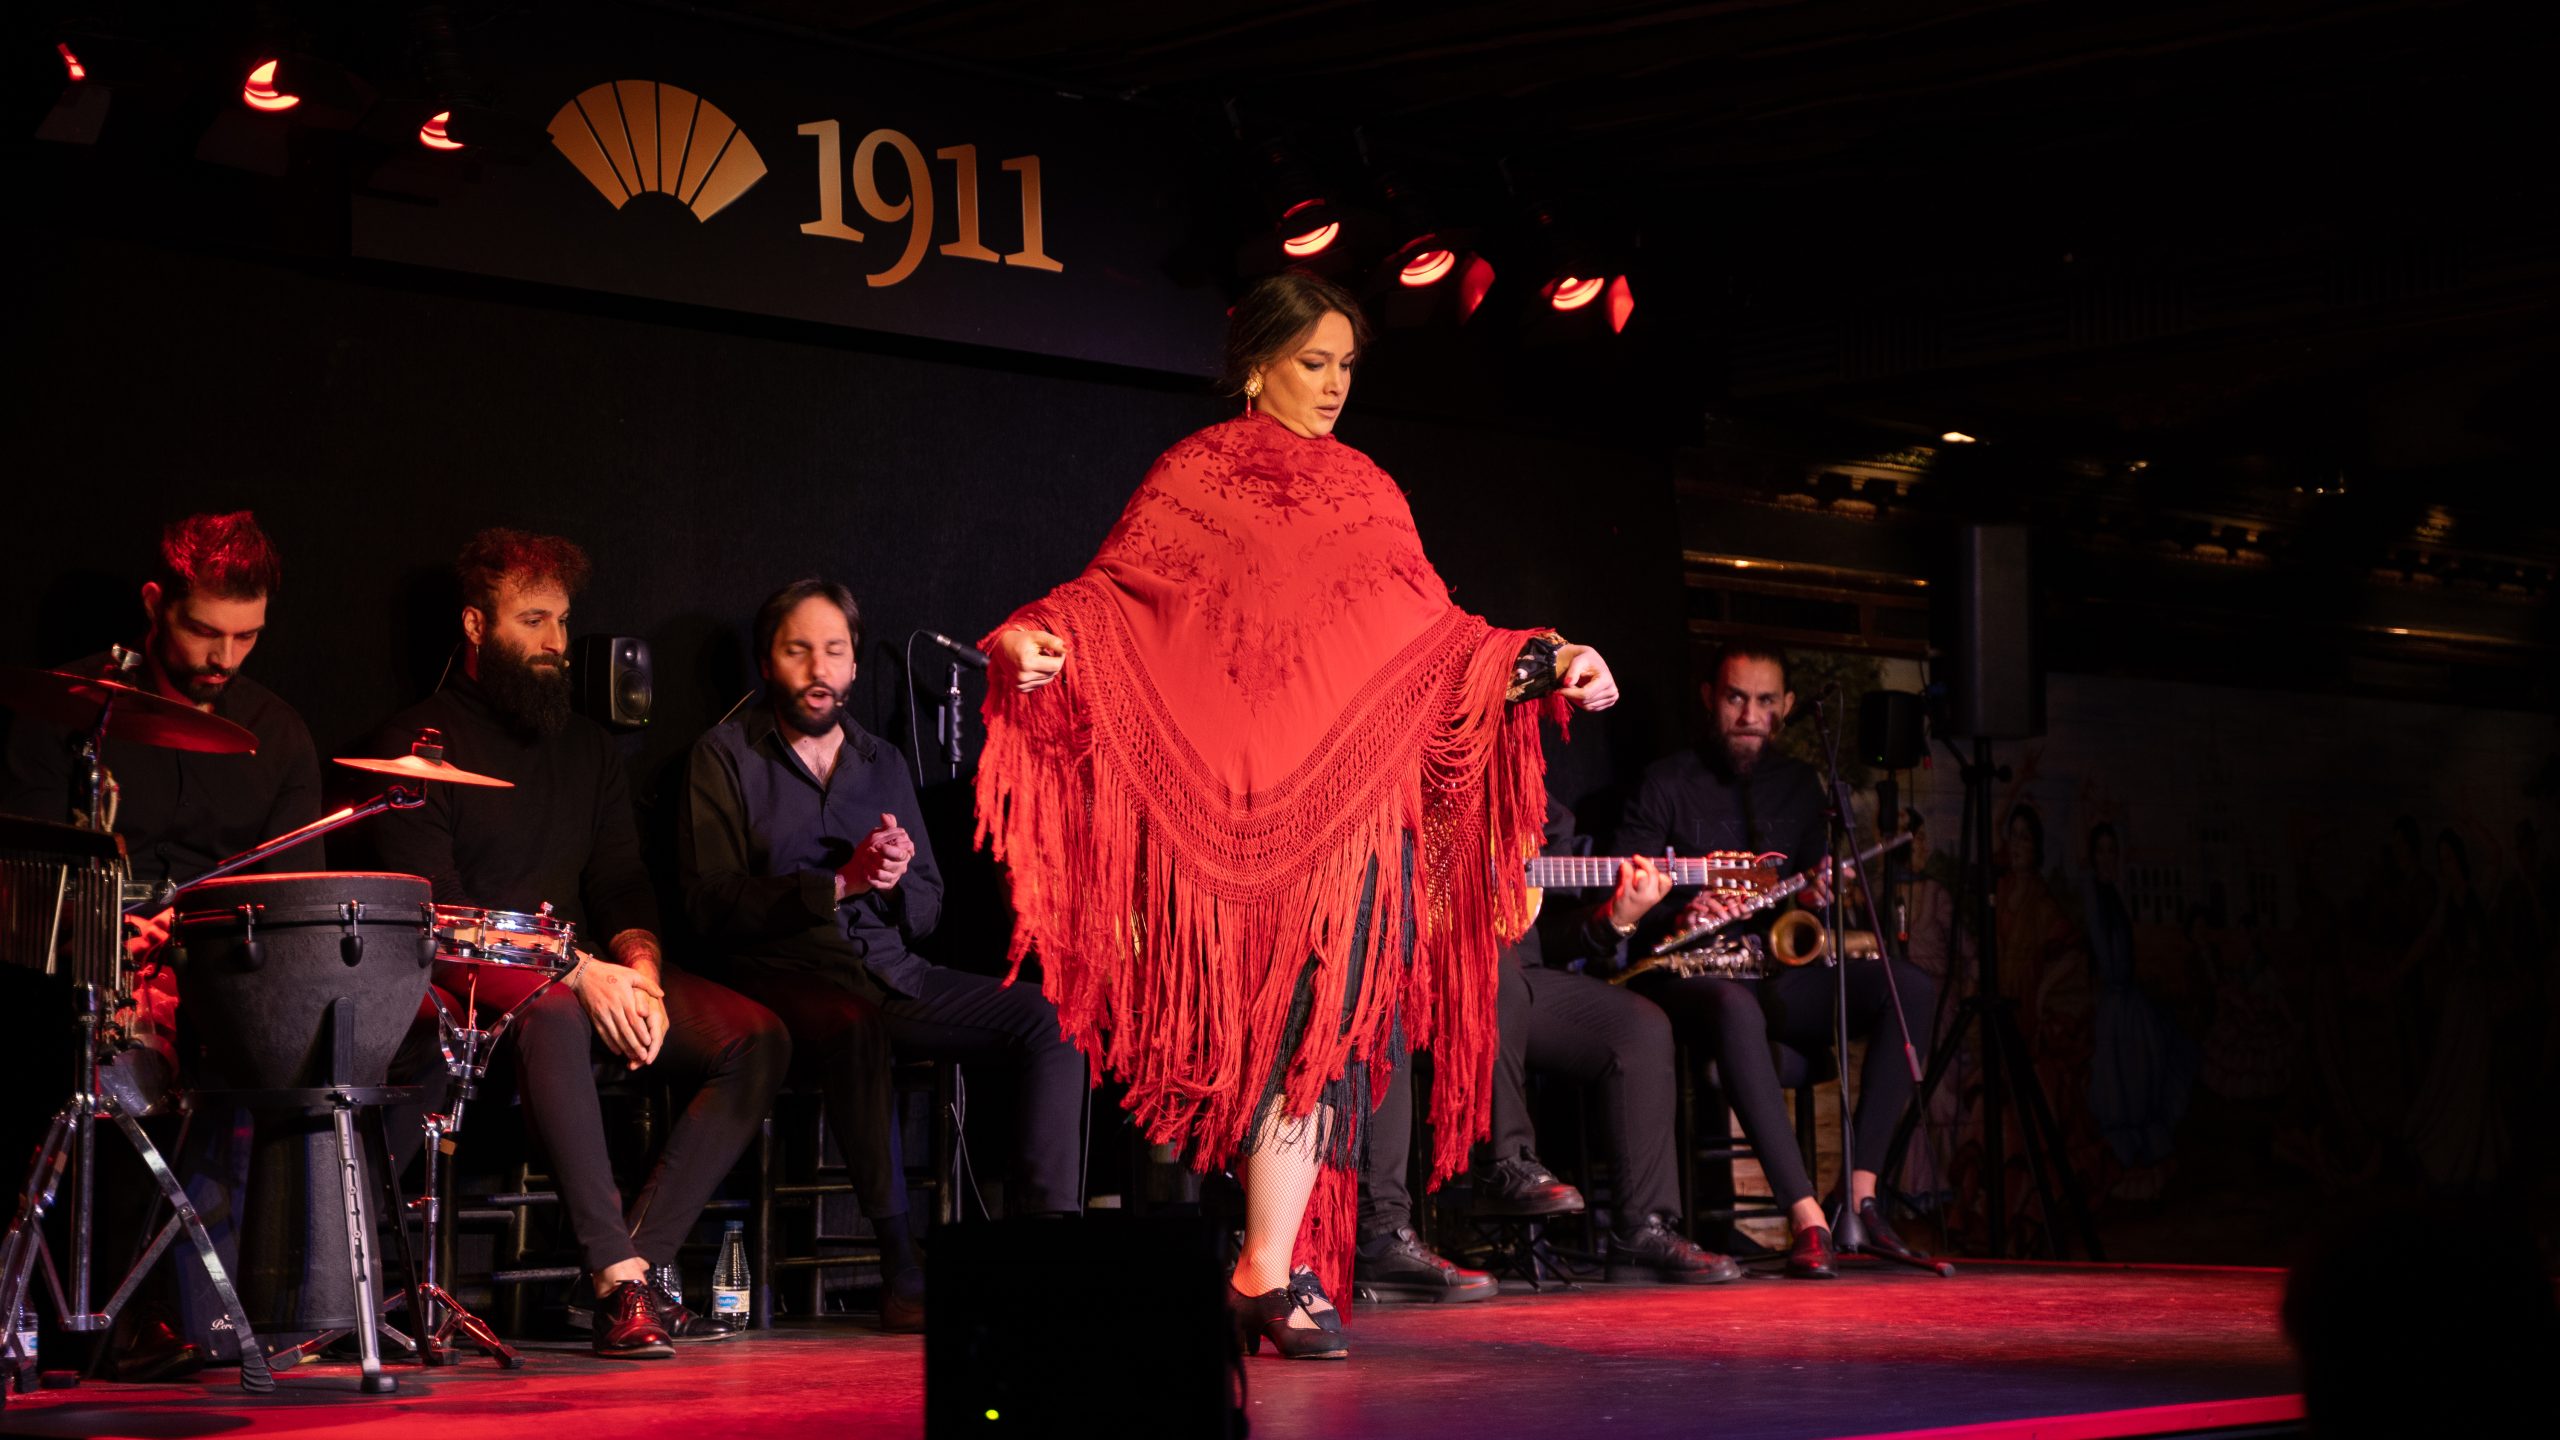 imagen_sala_Tablao Flamenco 1911_4